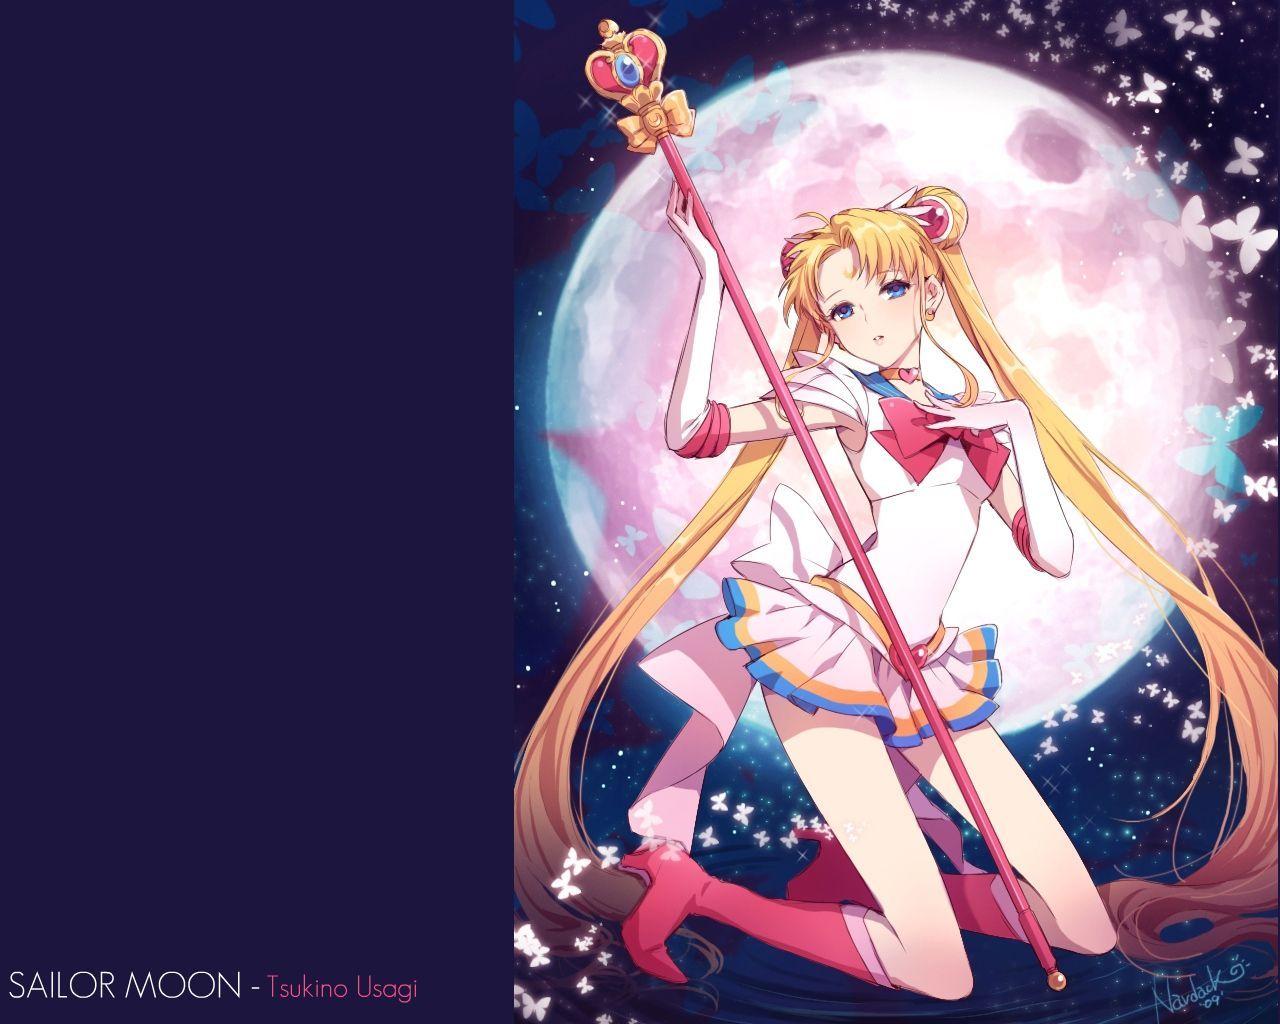 Trends For Aesthetic Sailor Moon Macbook Wallpaper images